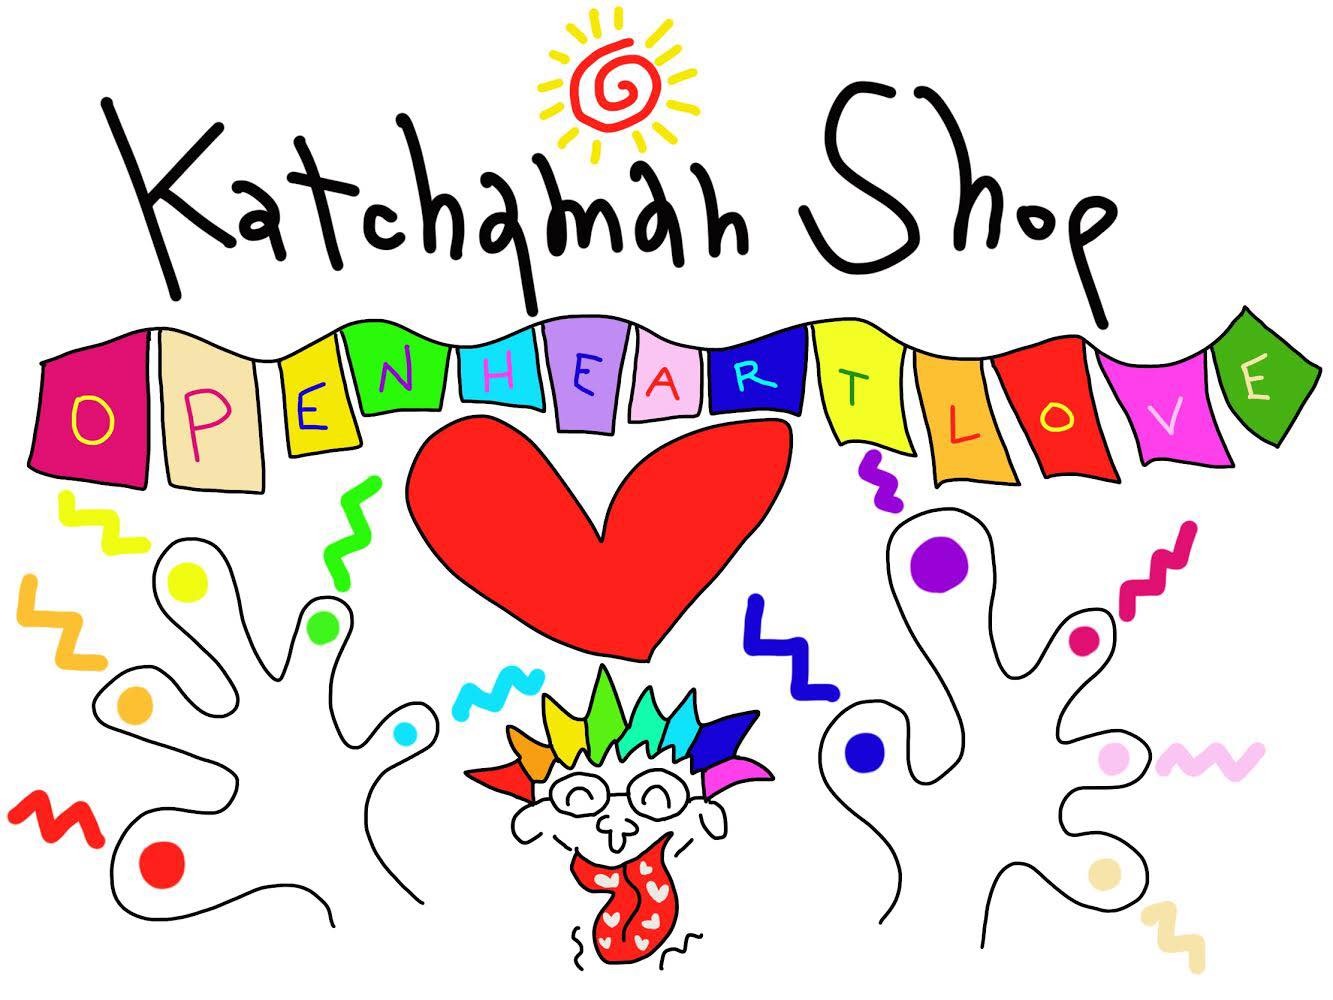 Katchaman Shop